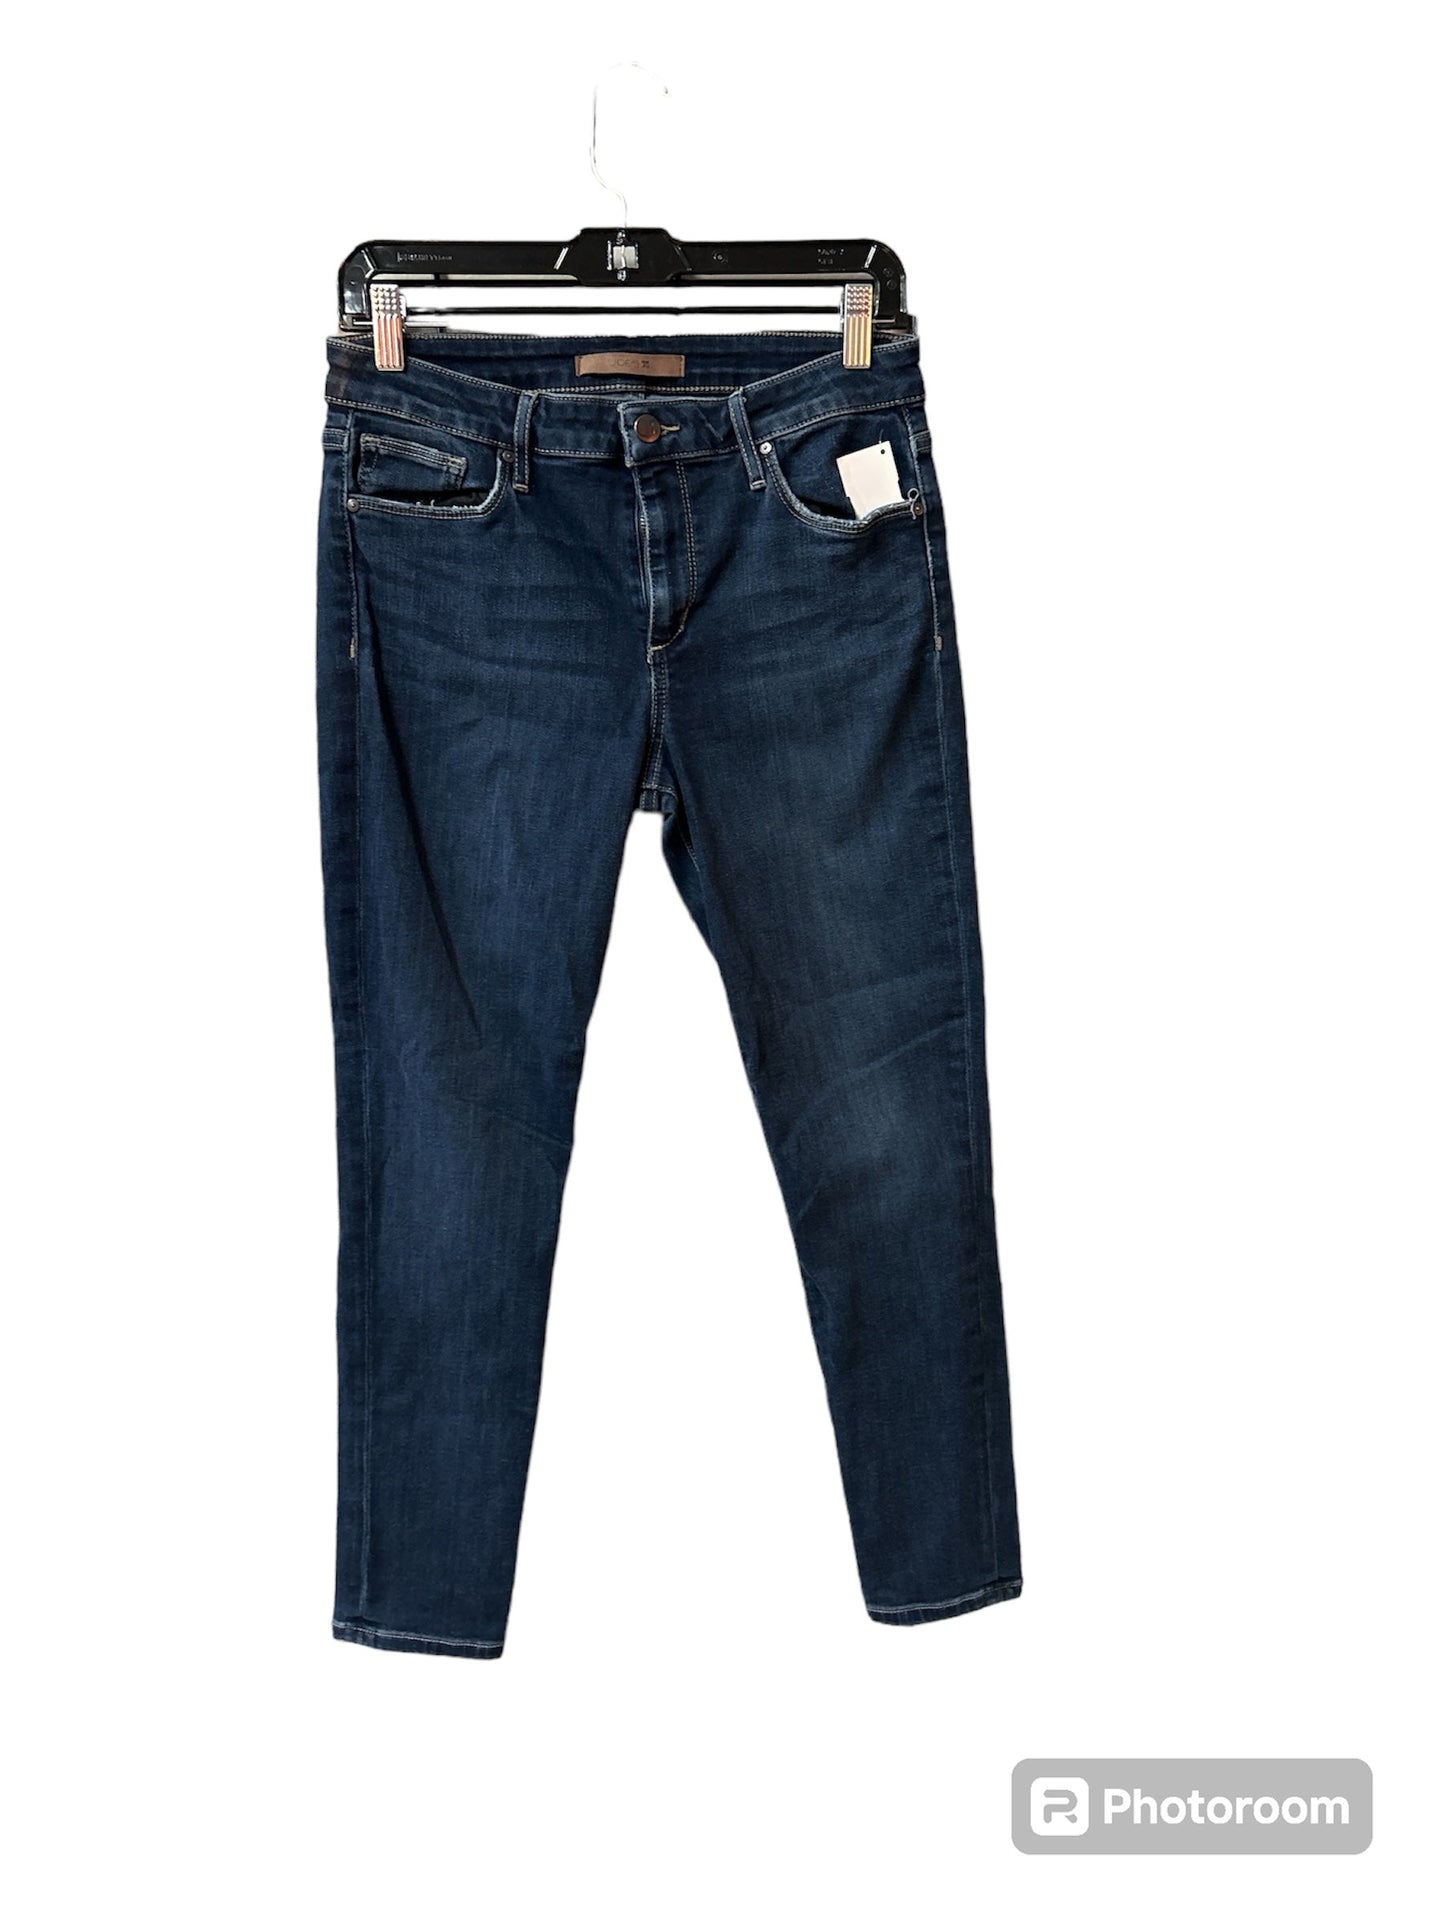 Blue Denim Jeans Designer Joes Jeans, Size 29w